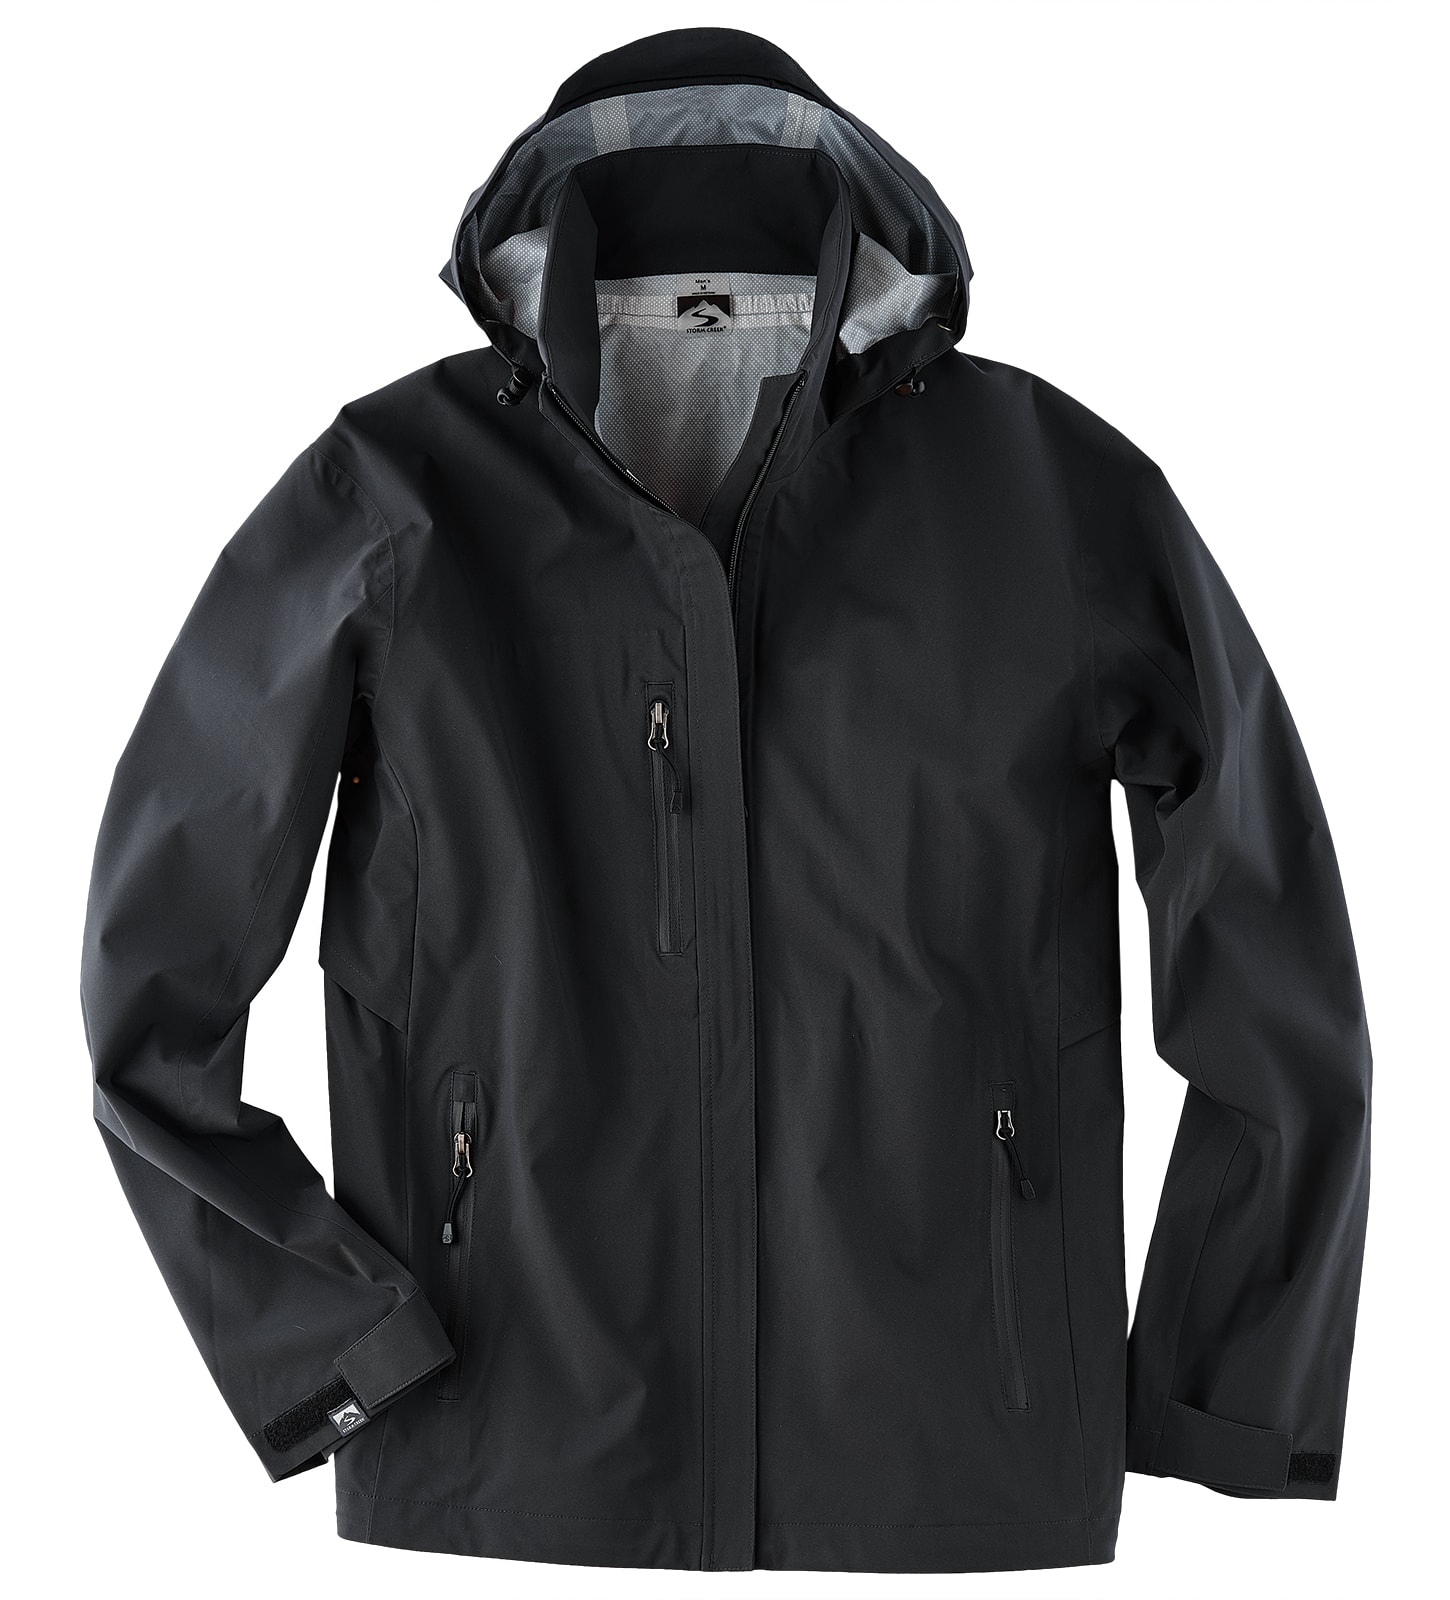 Storm Creek 6520 - Men's Explorer Waterproof Breathable Rain Jacket $95 ...